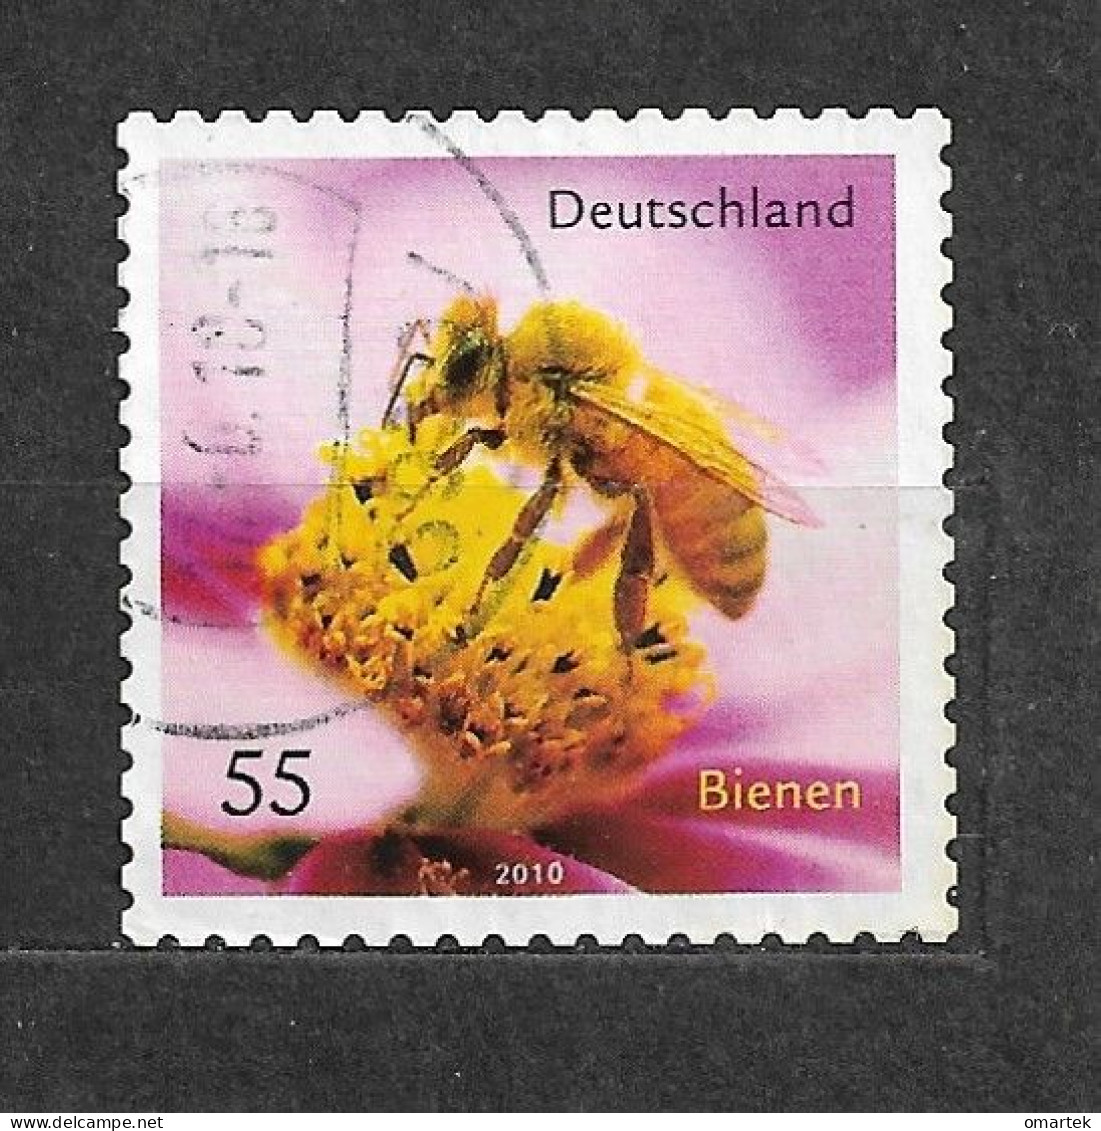 Deutschland Germany BRD 2010 ⊙ Mi 2799 Bienen. Honey Bee. - Oblitérés